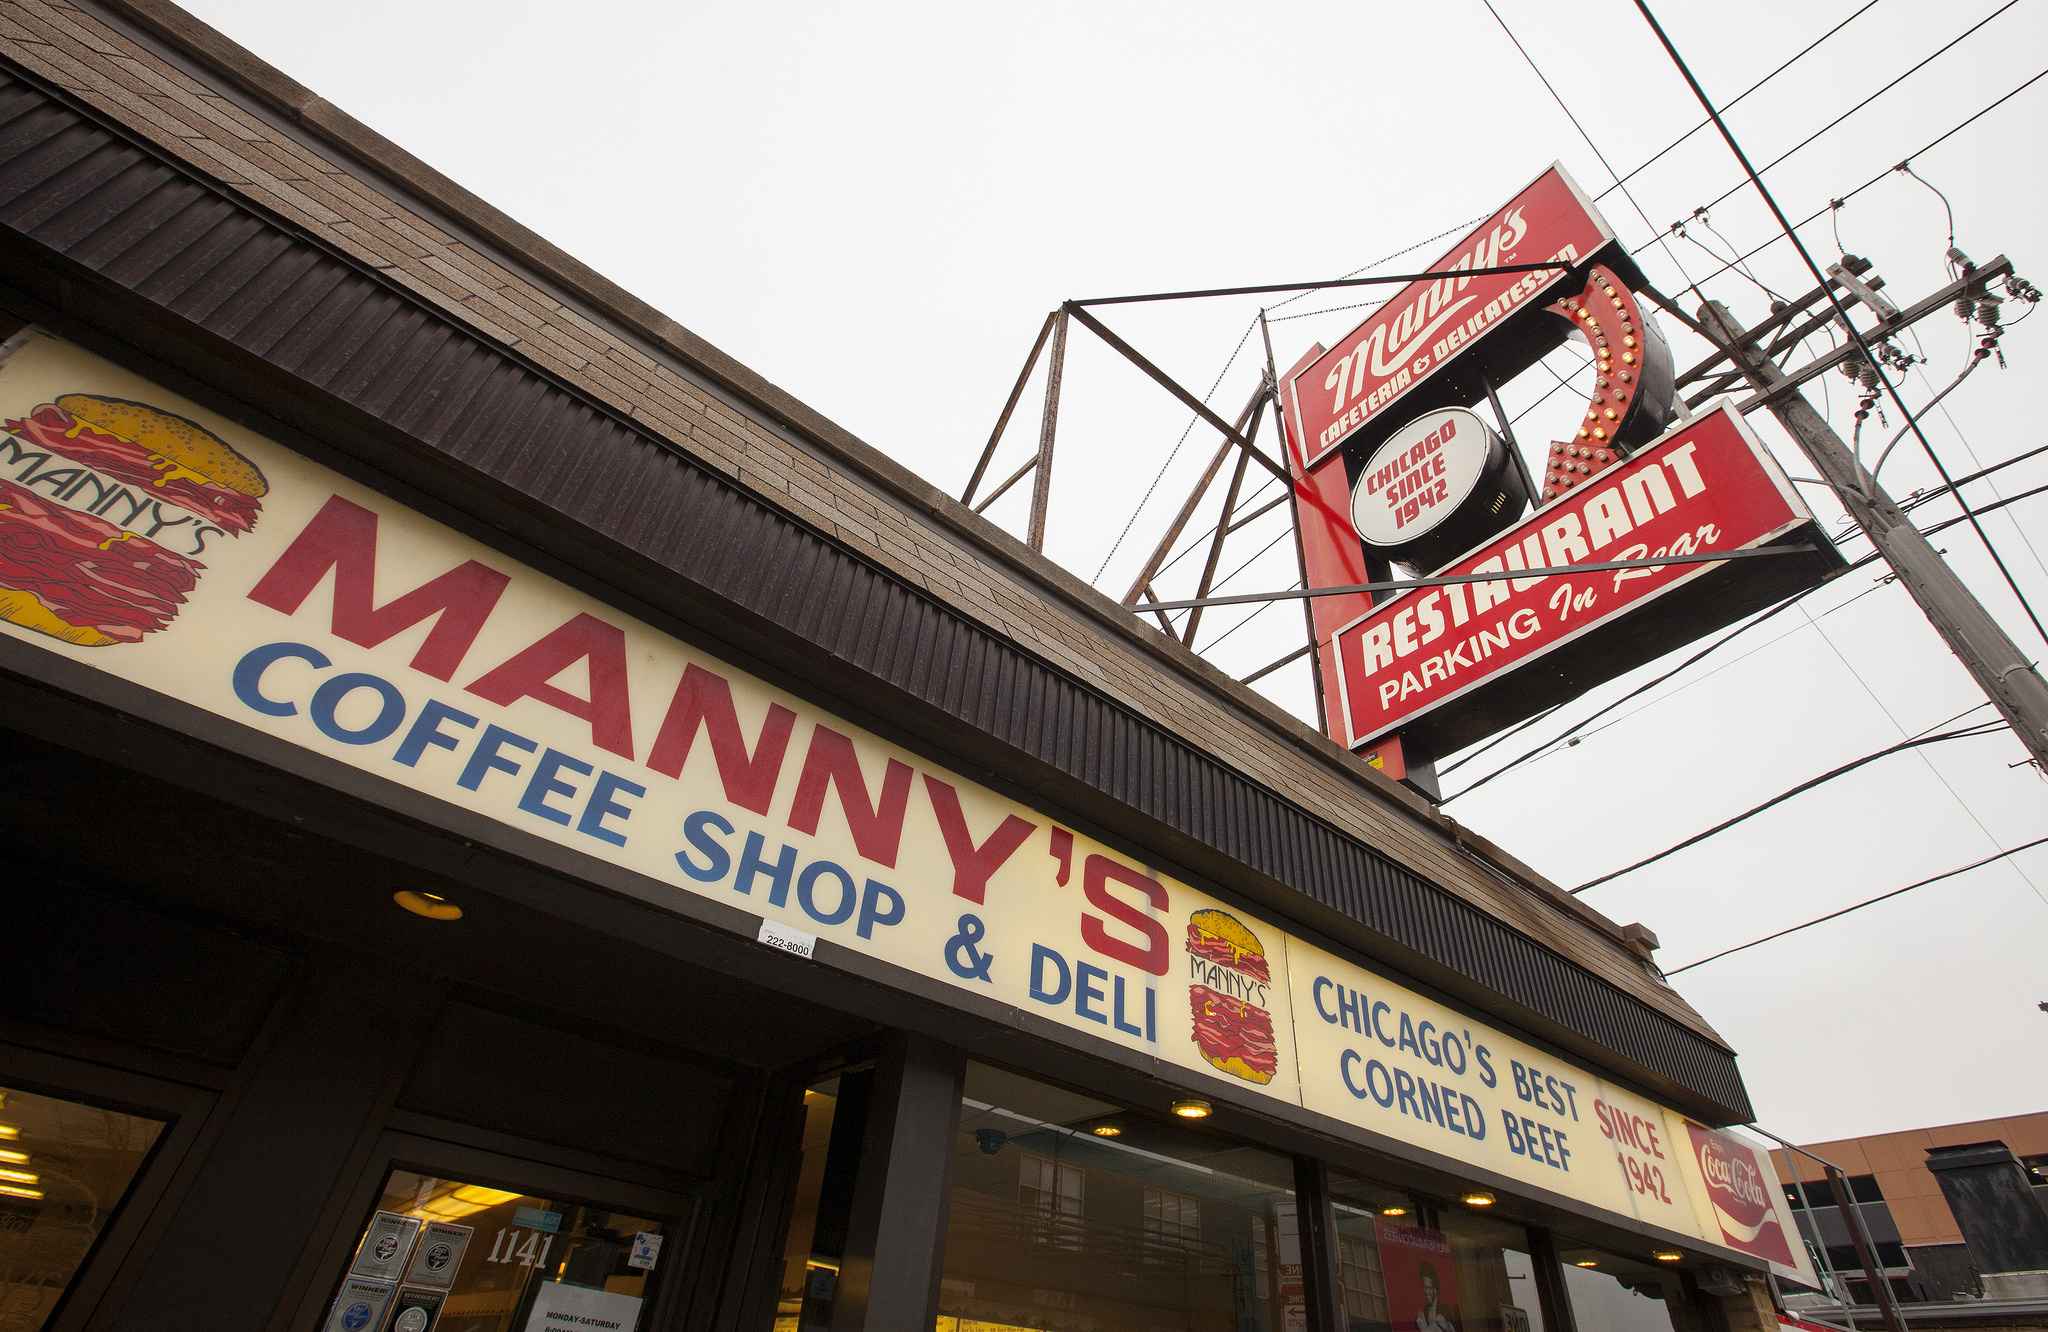 Manny's Coffee Shop & Deli